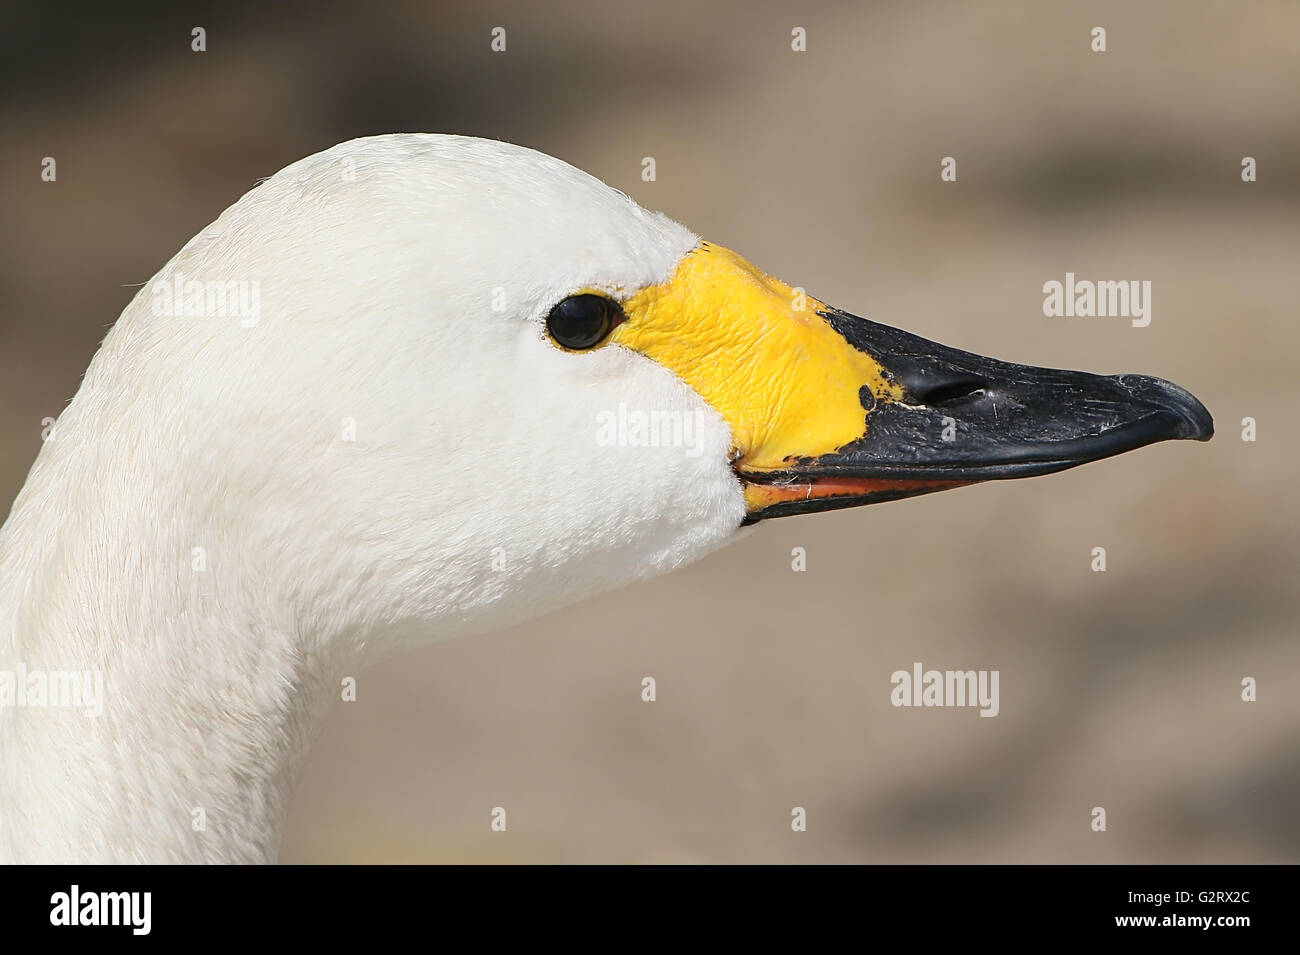 Eurasian Bewick's Swan (Cygnus bewickii, Cygnus columbianus bewickii), di profilo di close-up di testa e bill Foto Stock